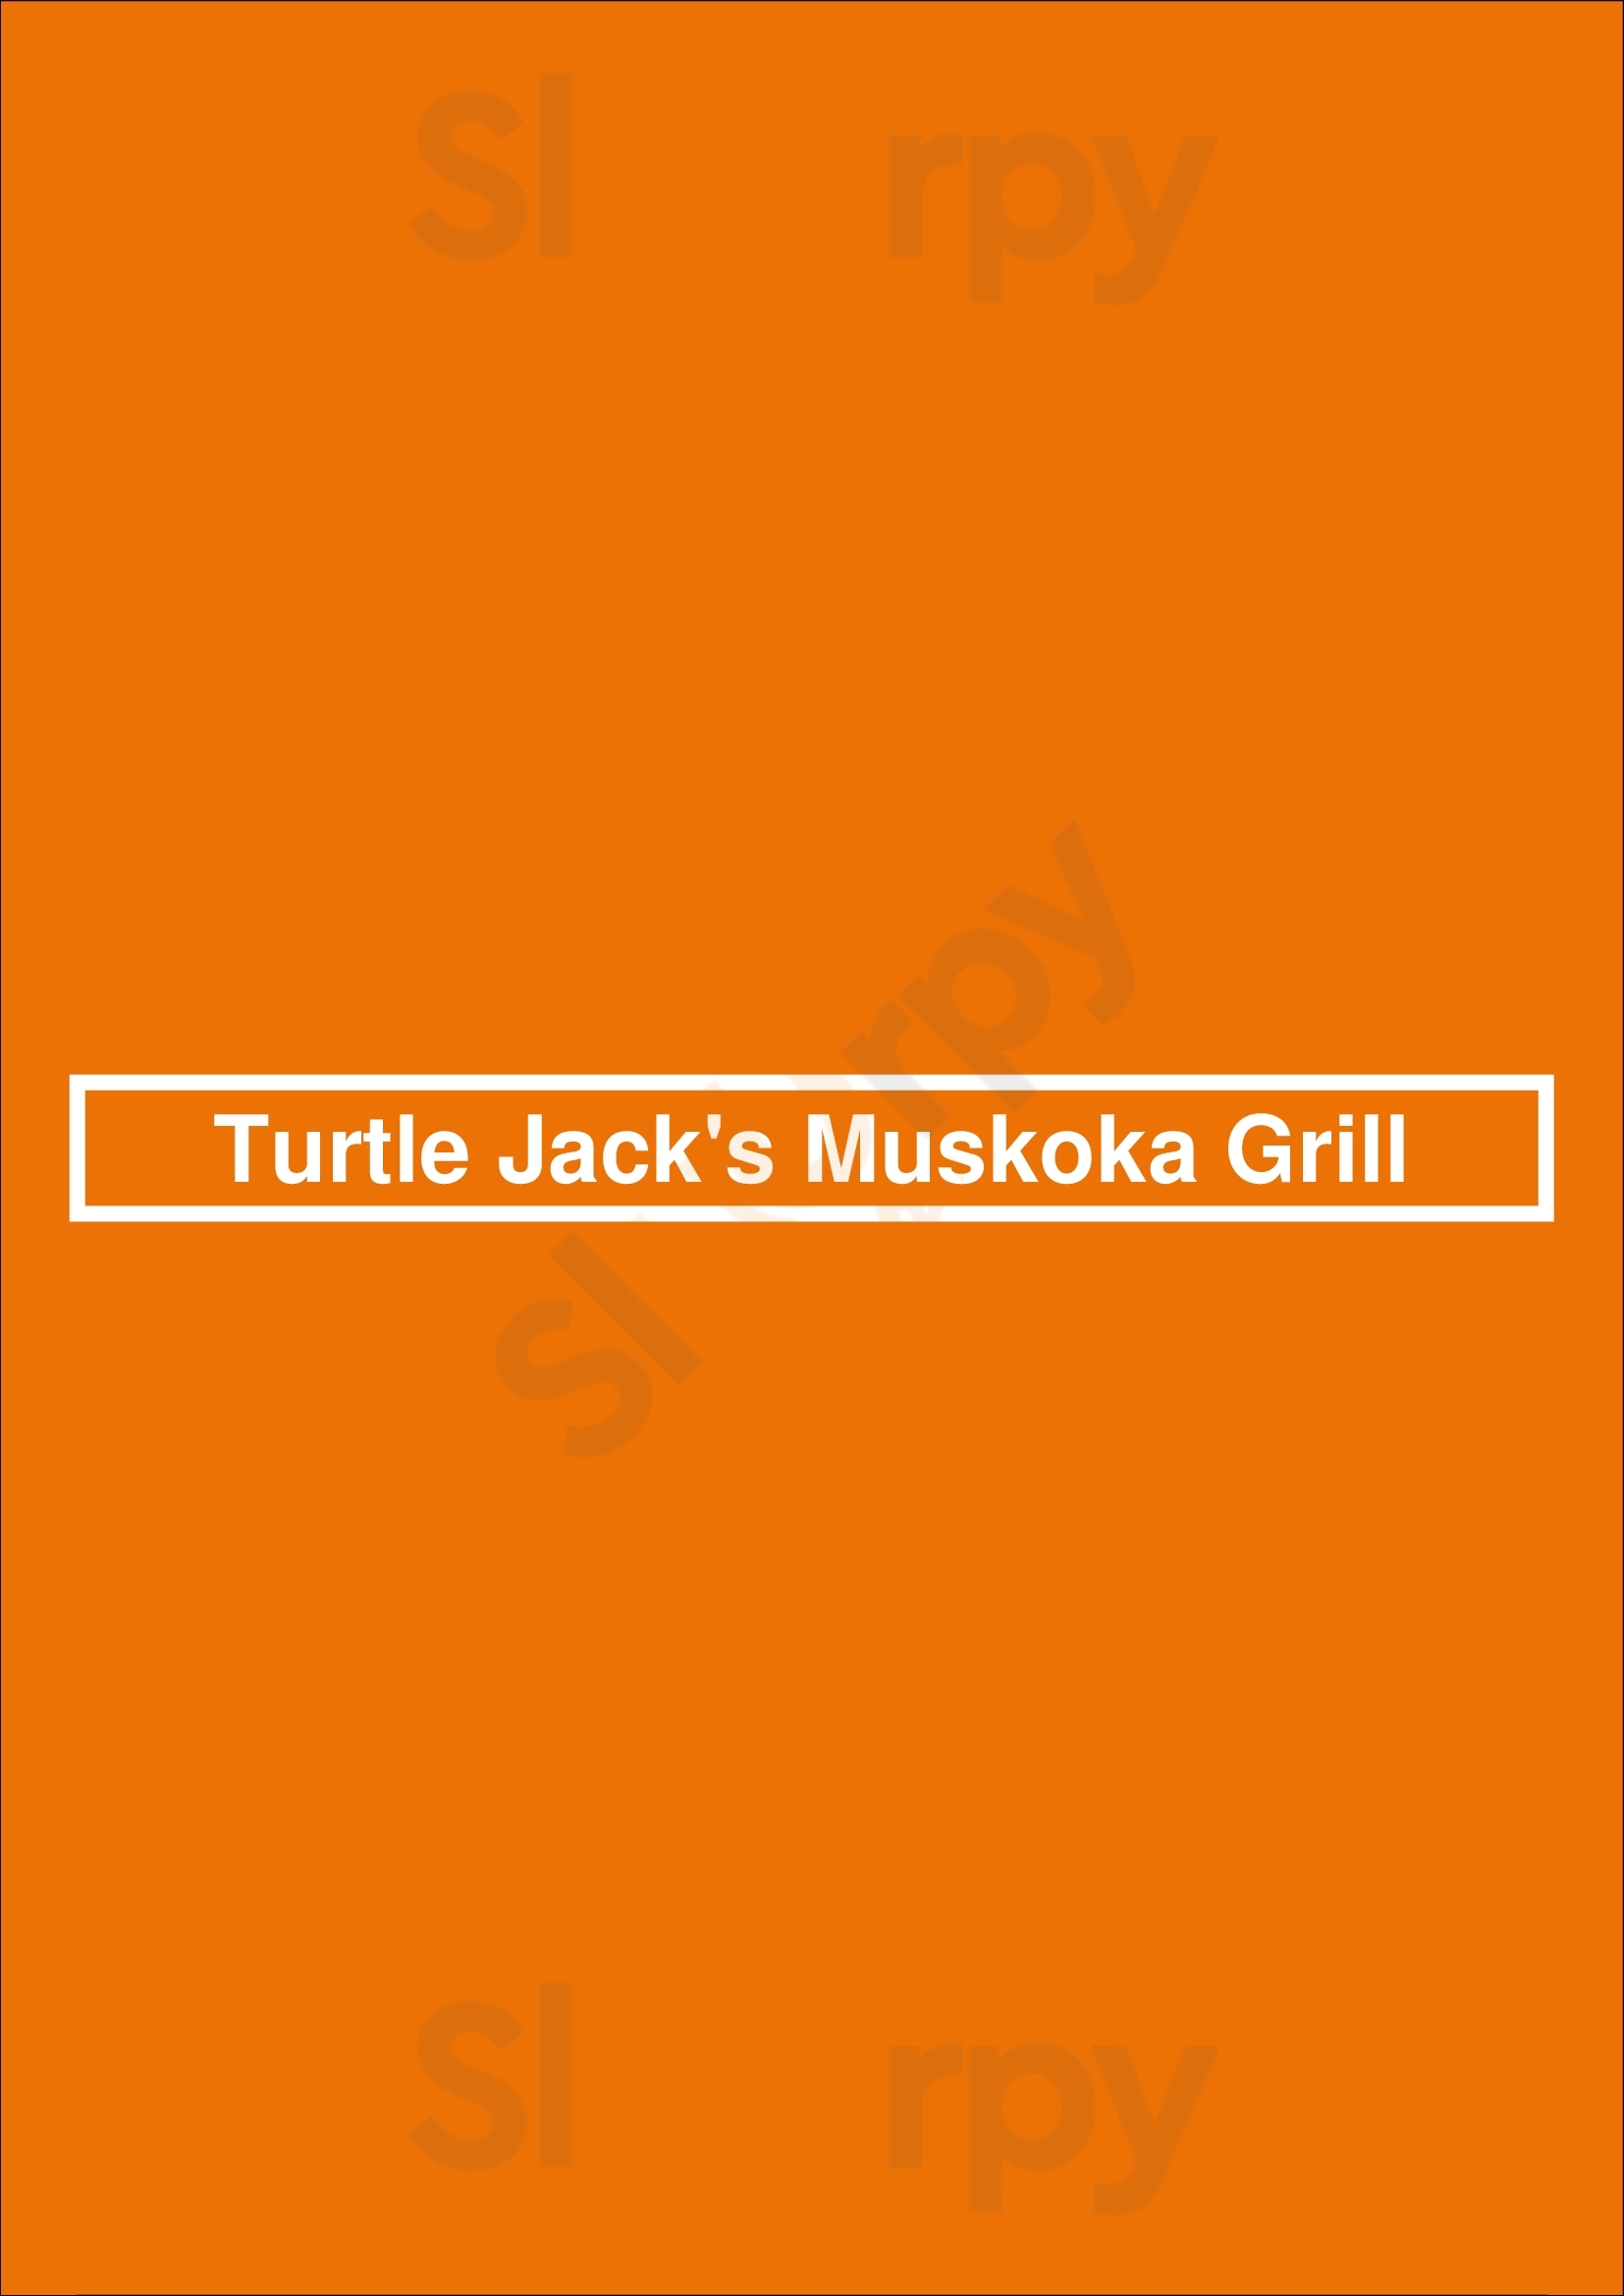 Turtle Jack's Courtney Park Mississauga Menu - 1